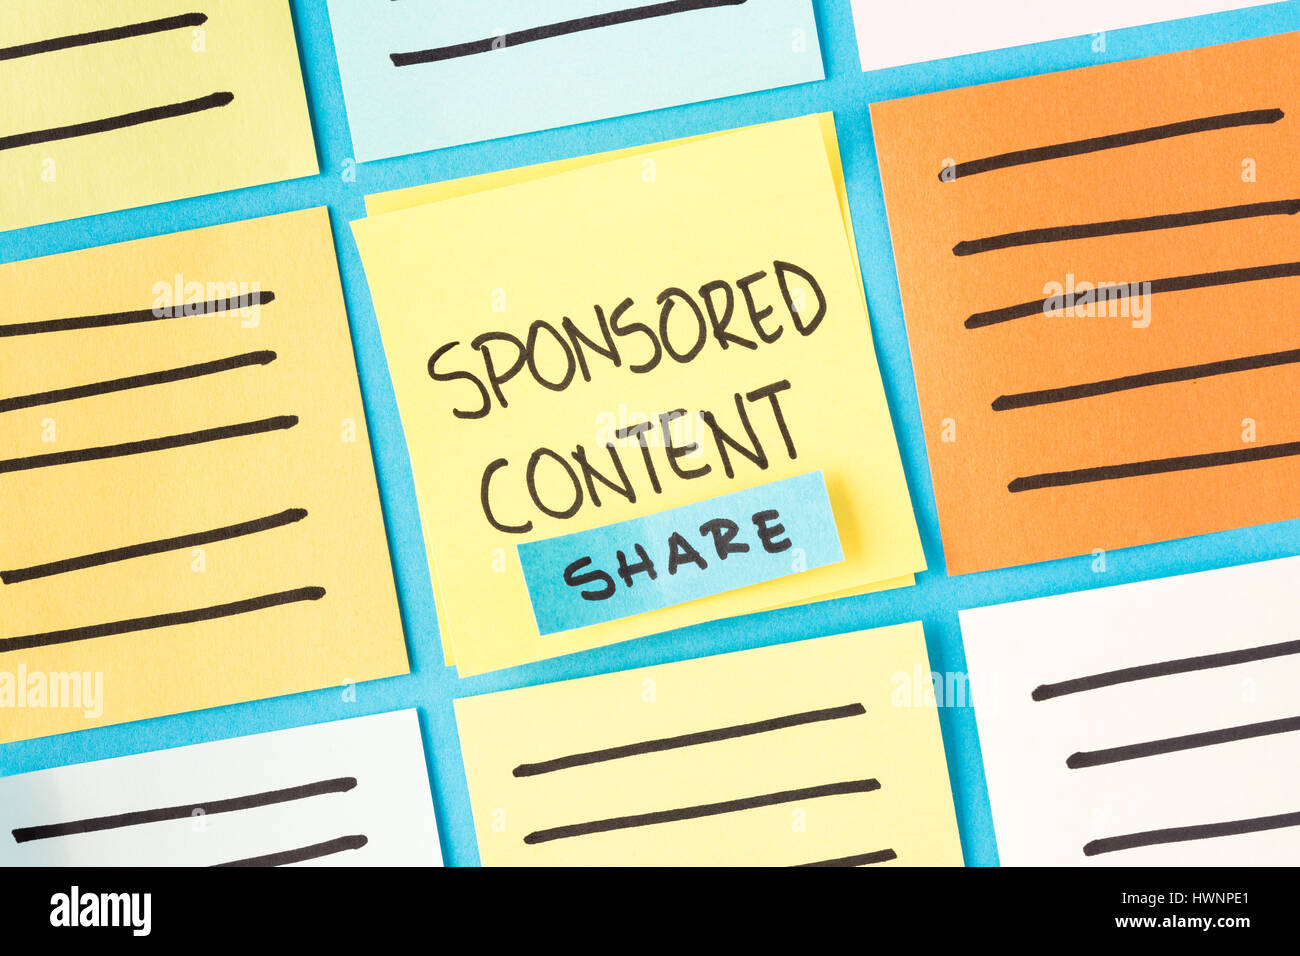 Sponsored content. Marketing concept Stock Photo